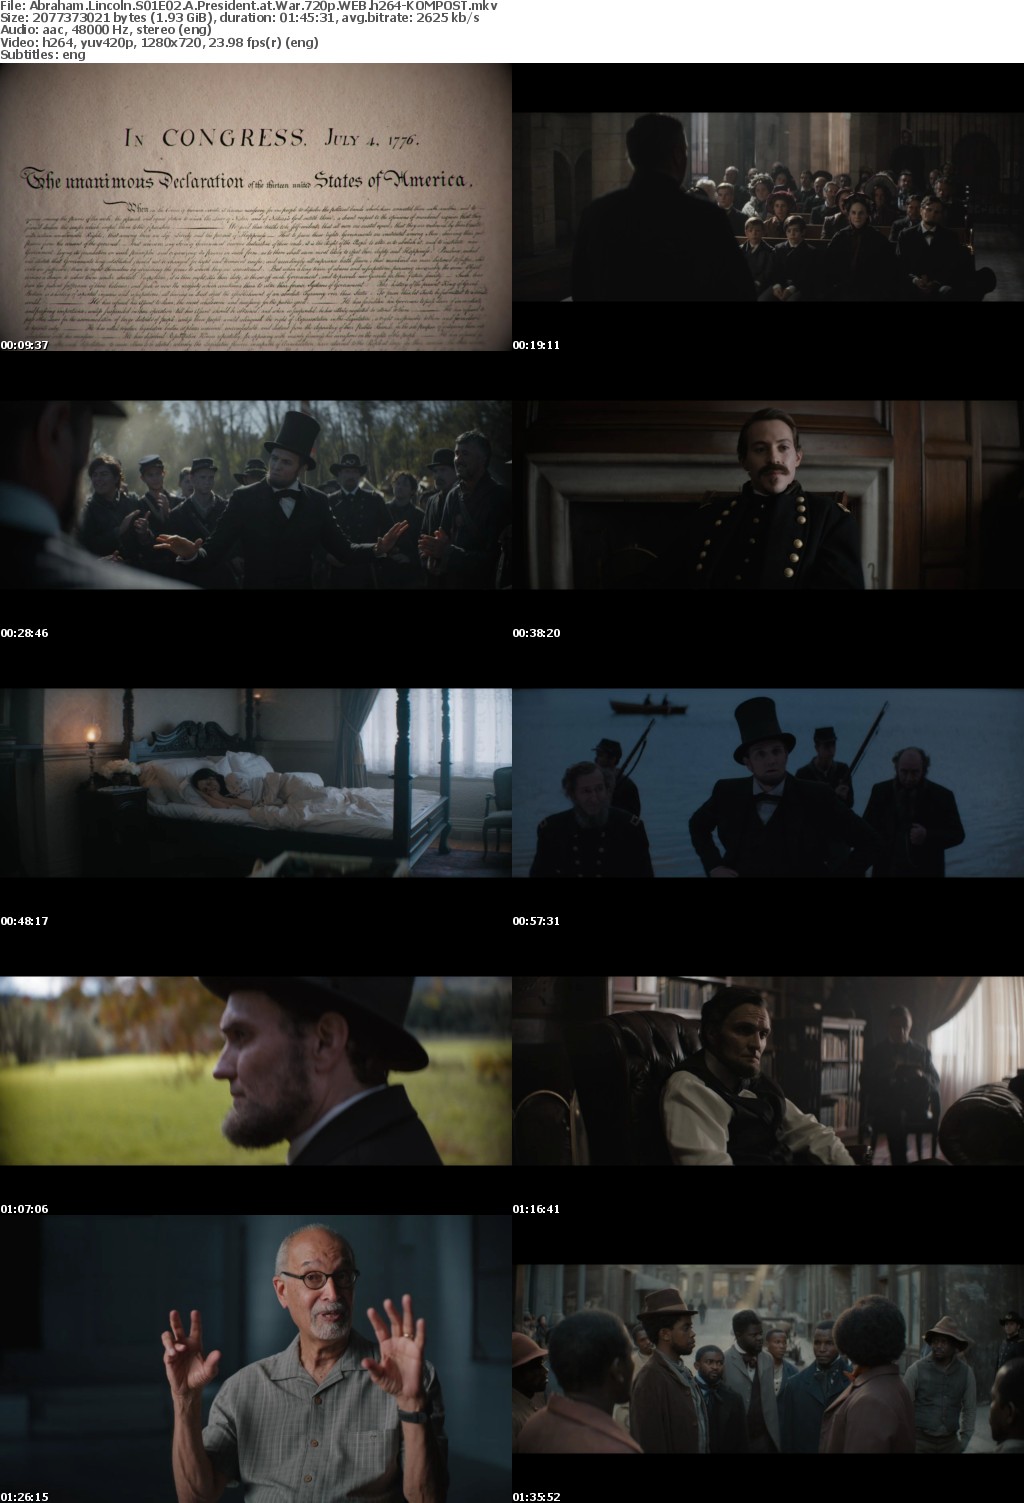 Abraham Lincoln S01E02 A President at War 720p WEB h264-KOMPOST